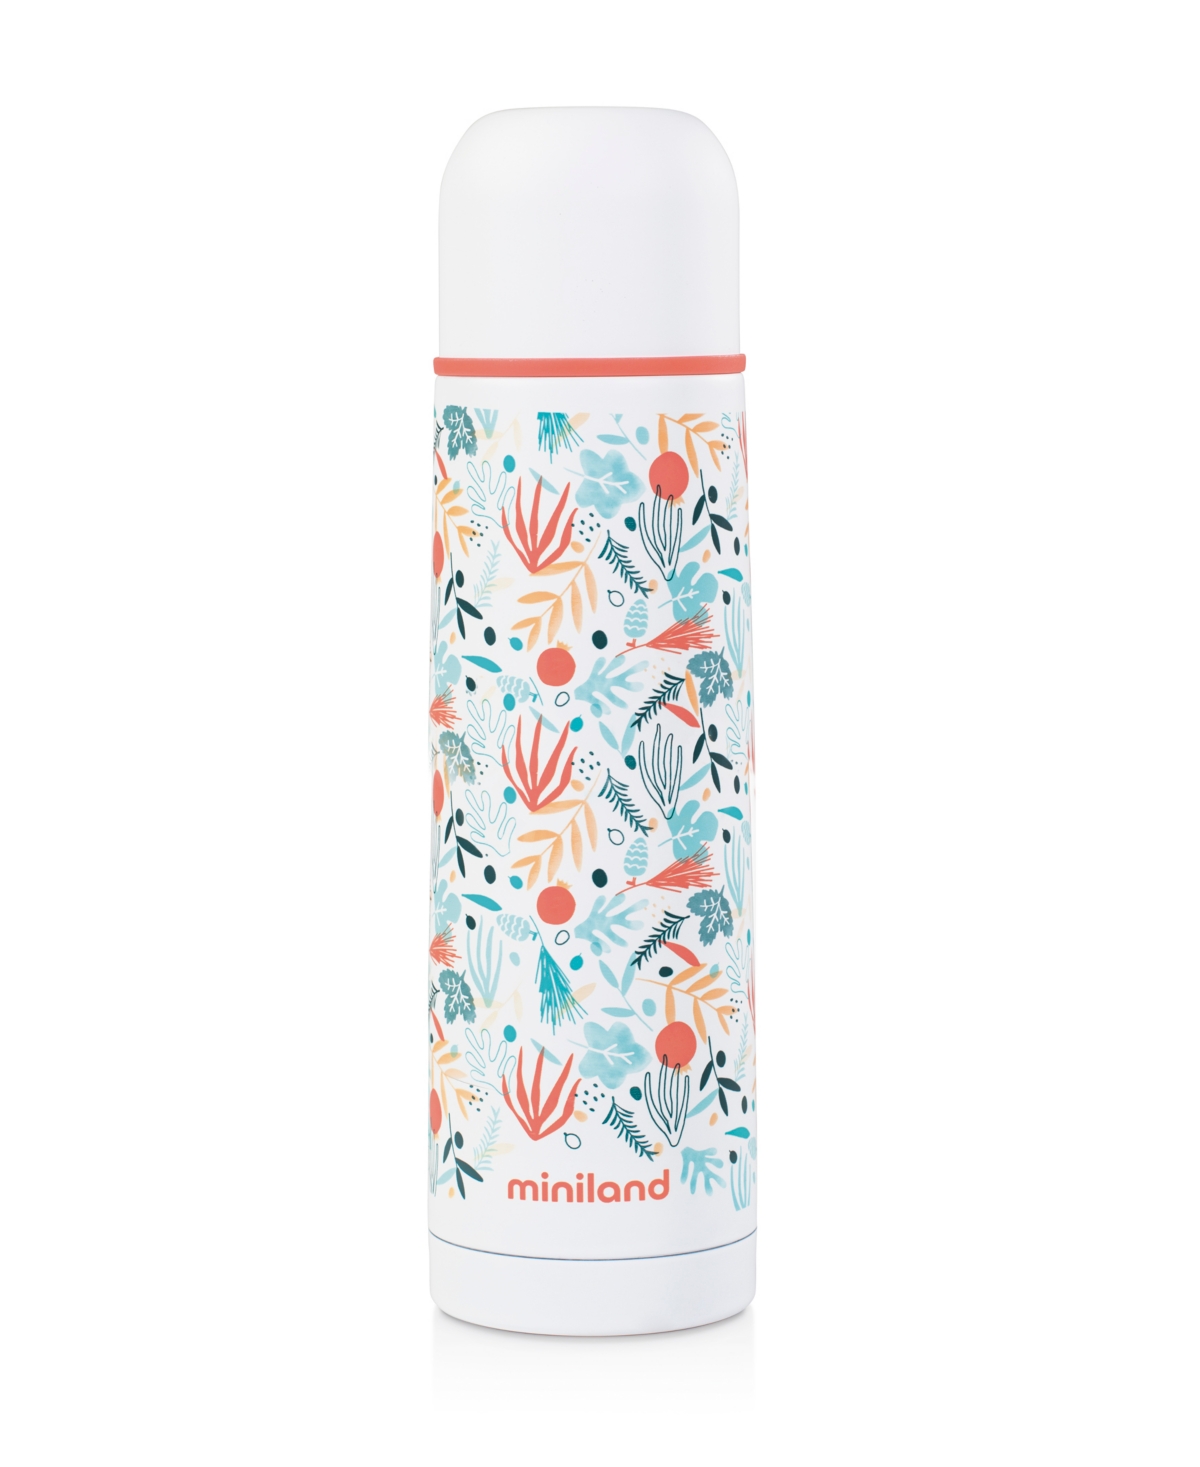 Miniland Mediterranean Insulated Bottle, 17 oz In No Color